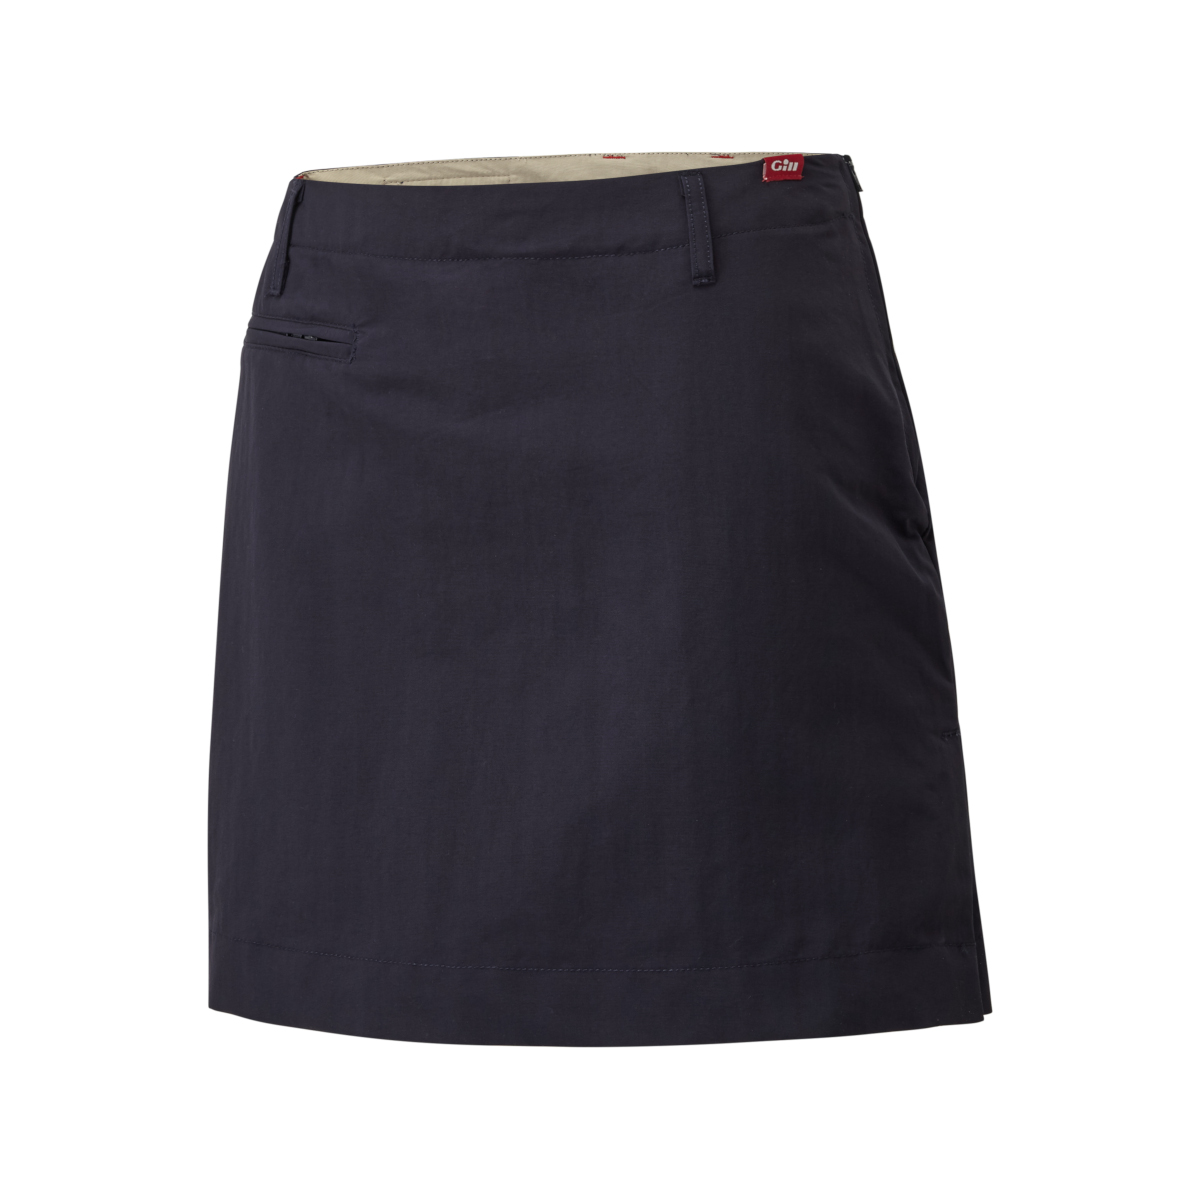 Gill UV Tec jupe-short, femme - bleu marine, taille 12